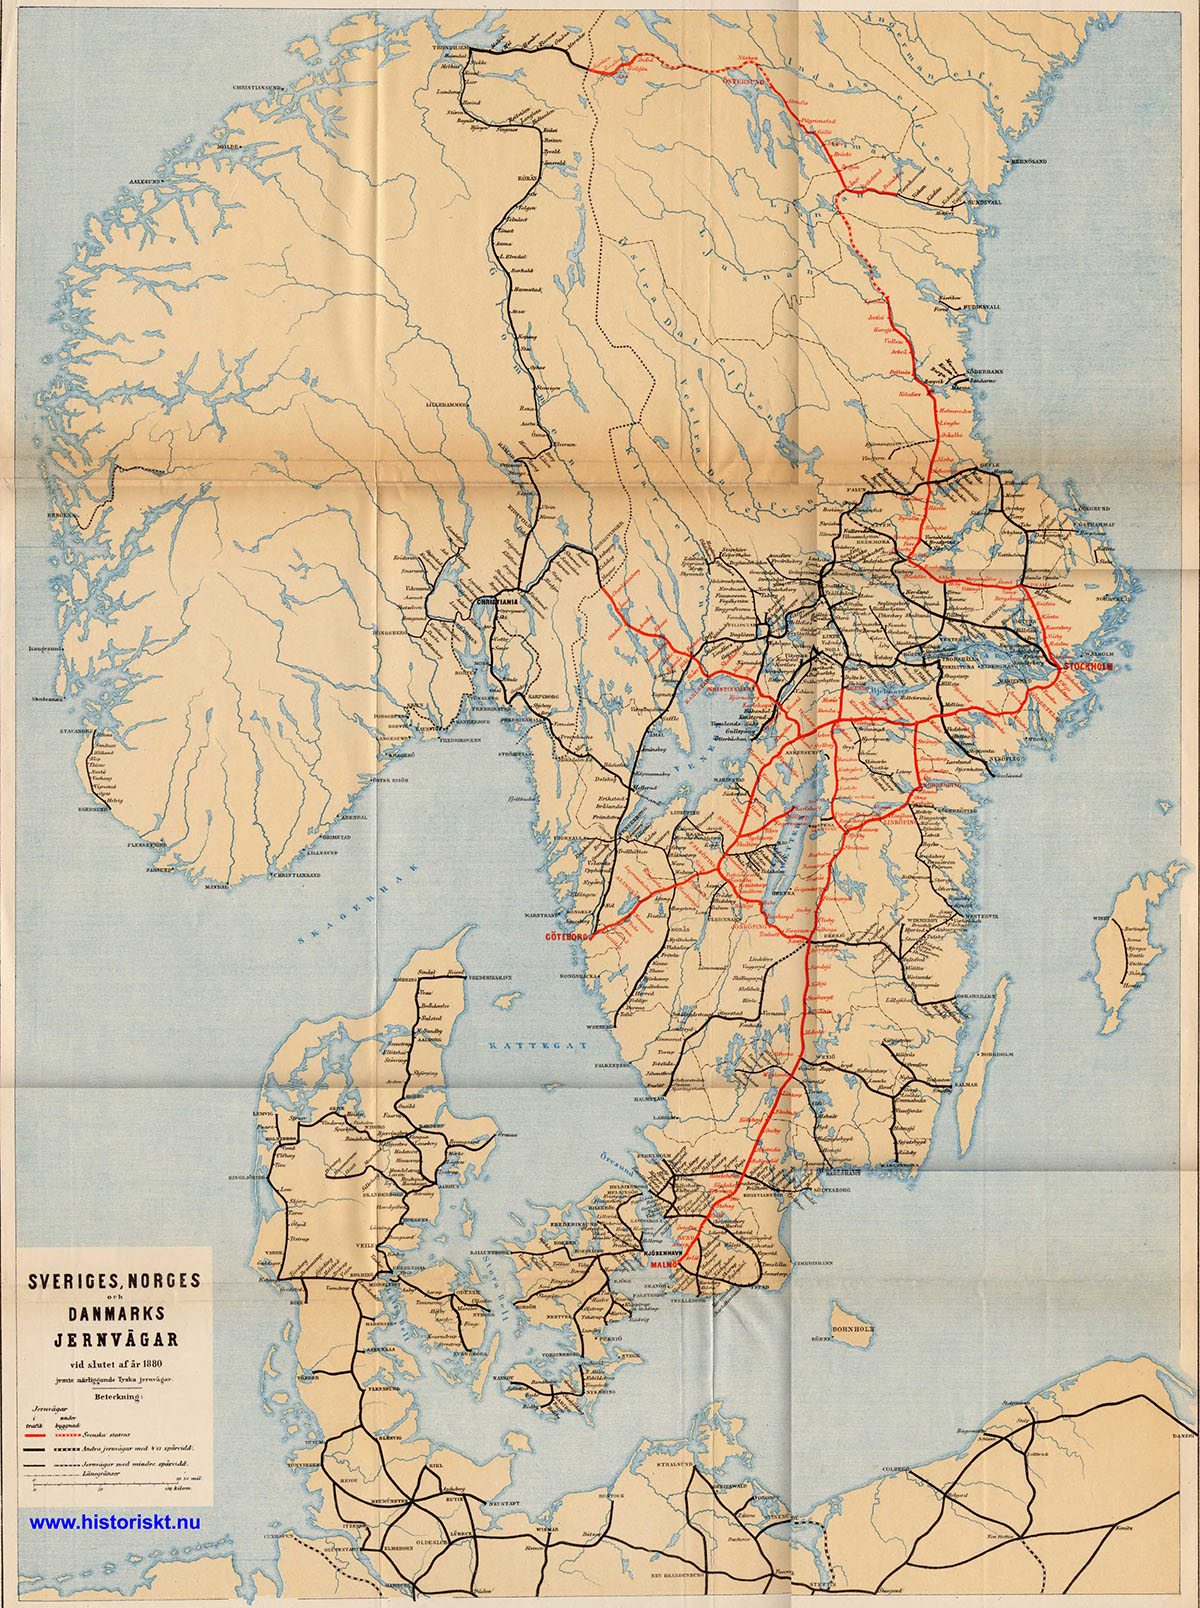 Karta ver jrnvgarna i Sverige, Norge och Danmark 1880.